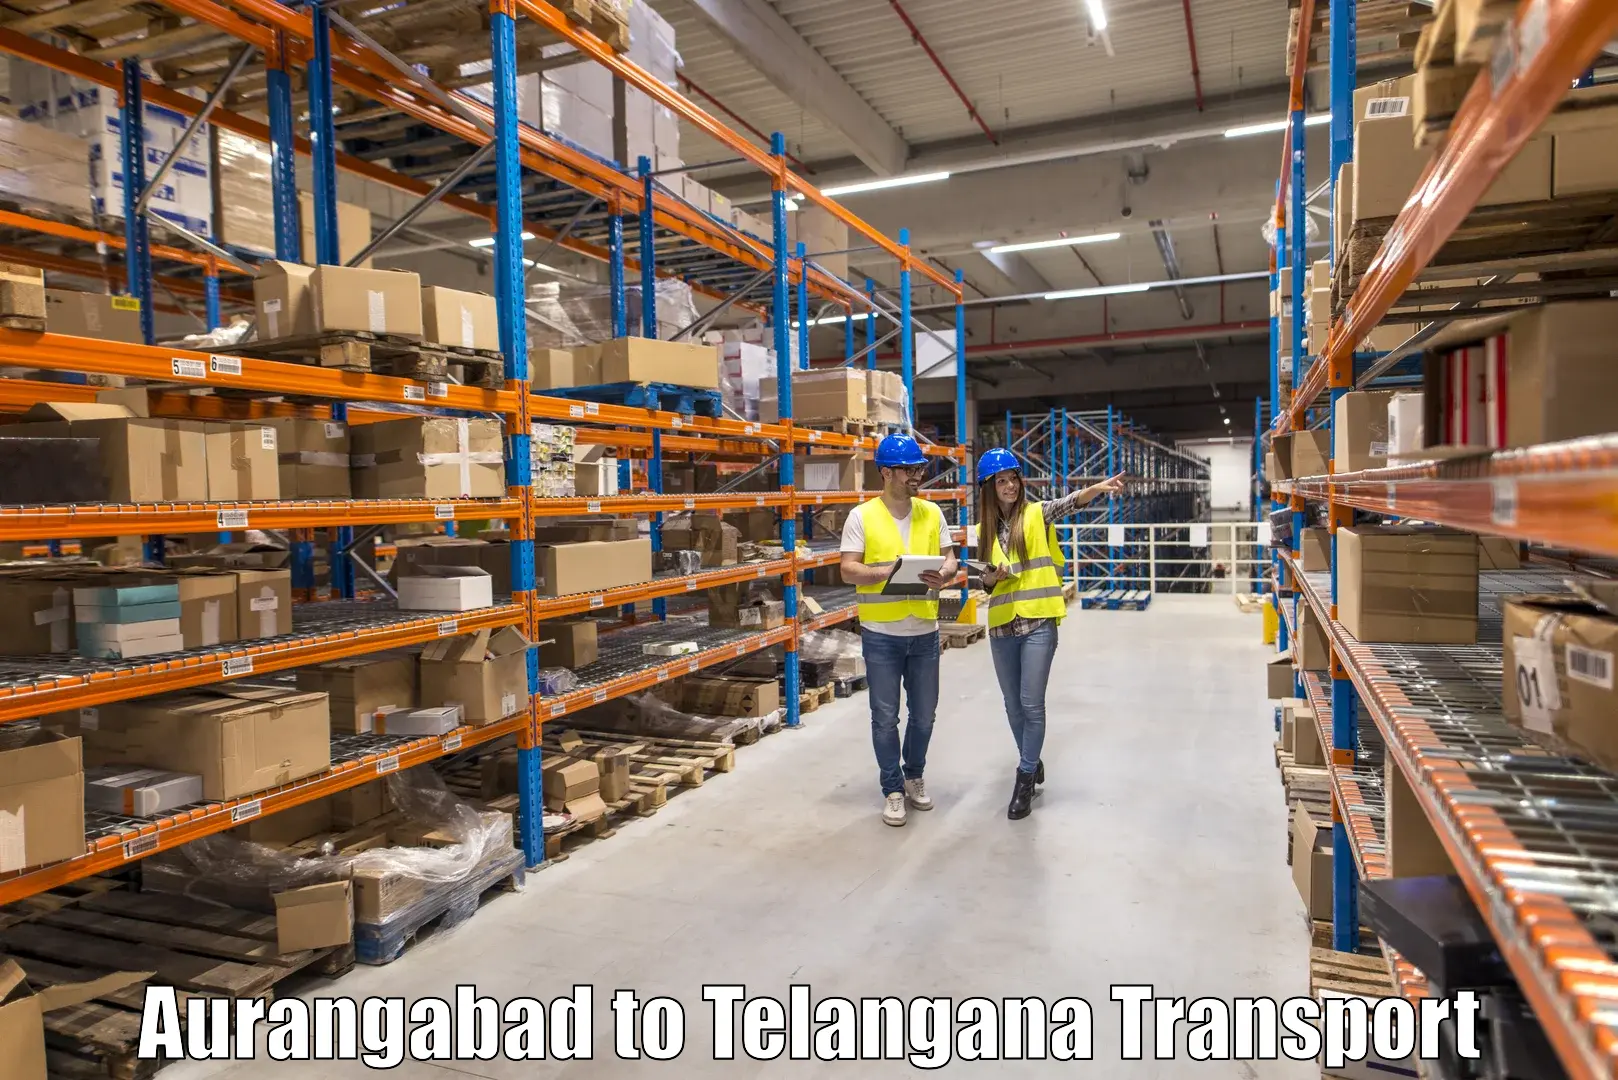 Transport in sharing Aurangabad to Dubbak